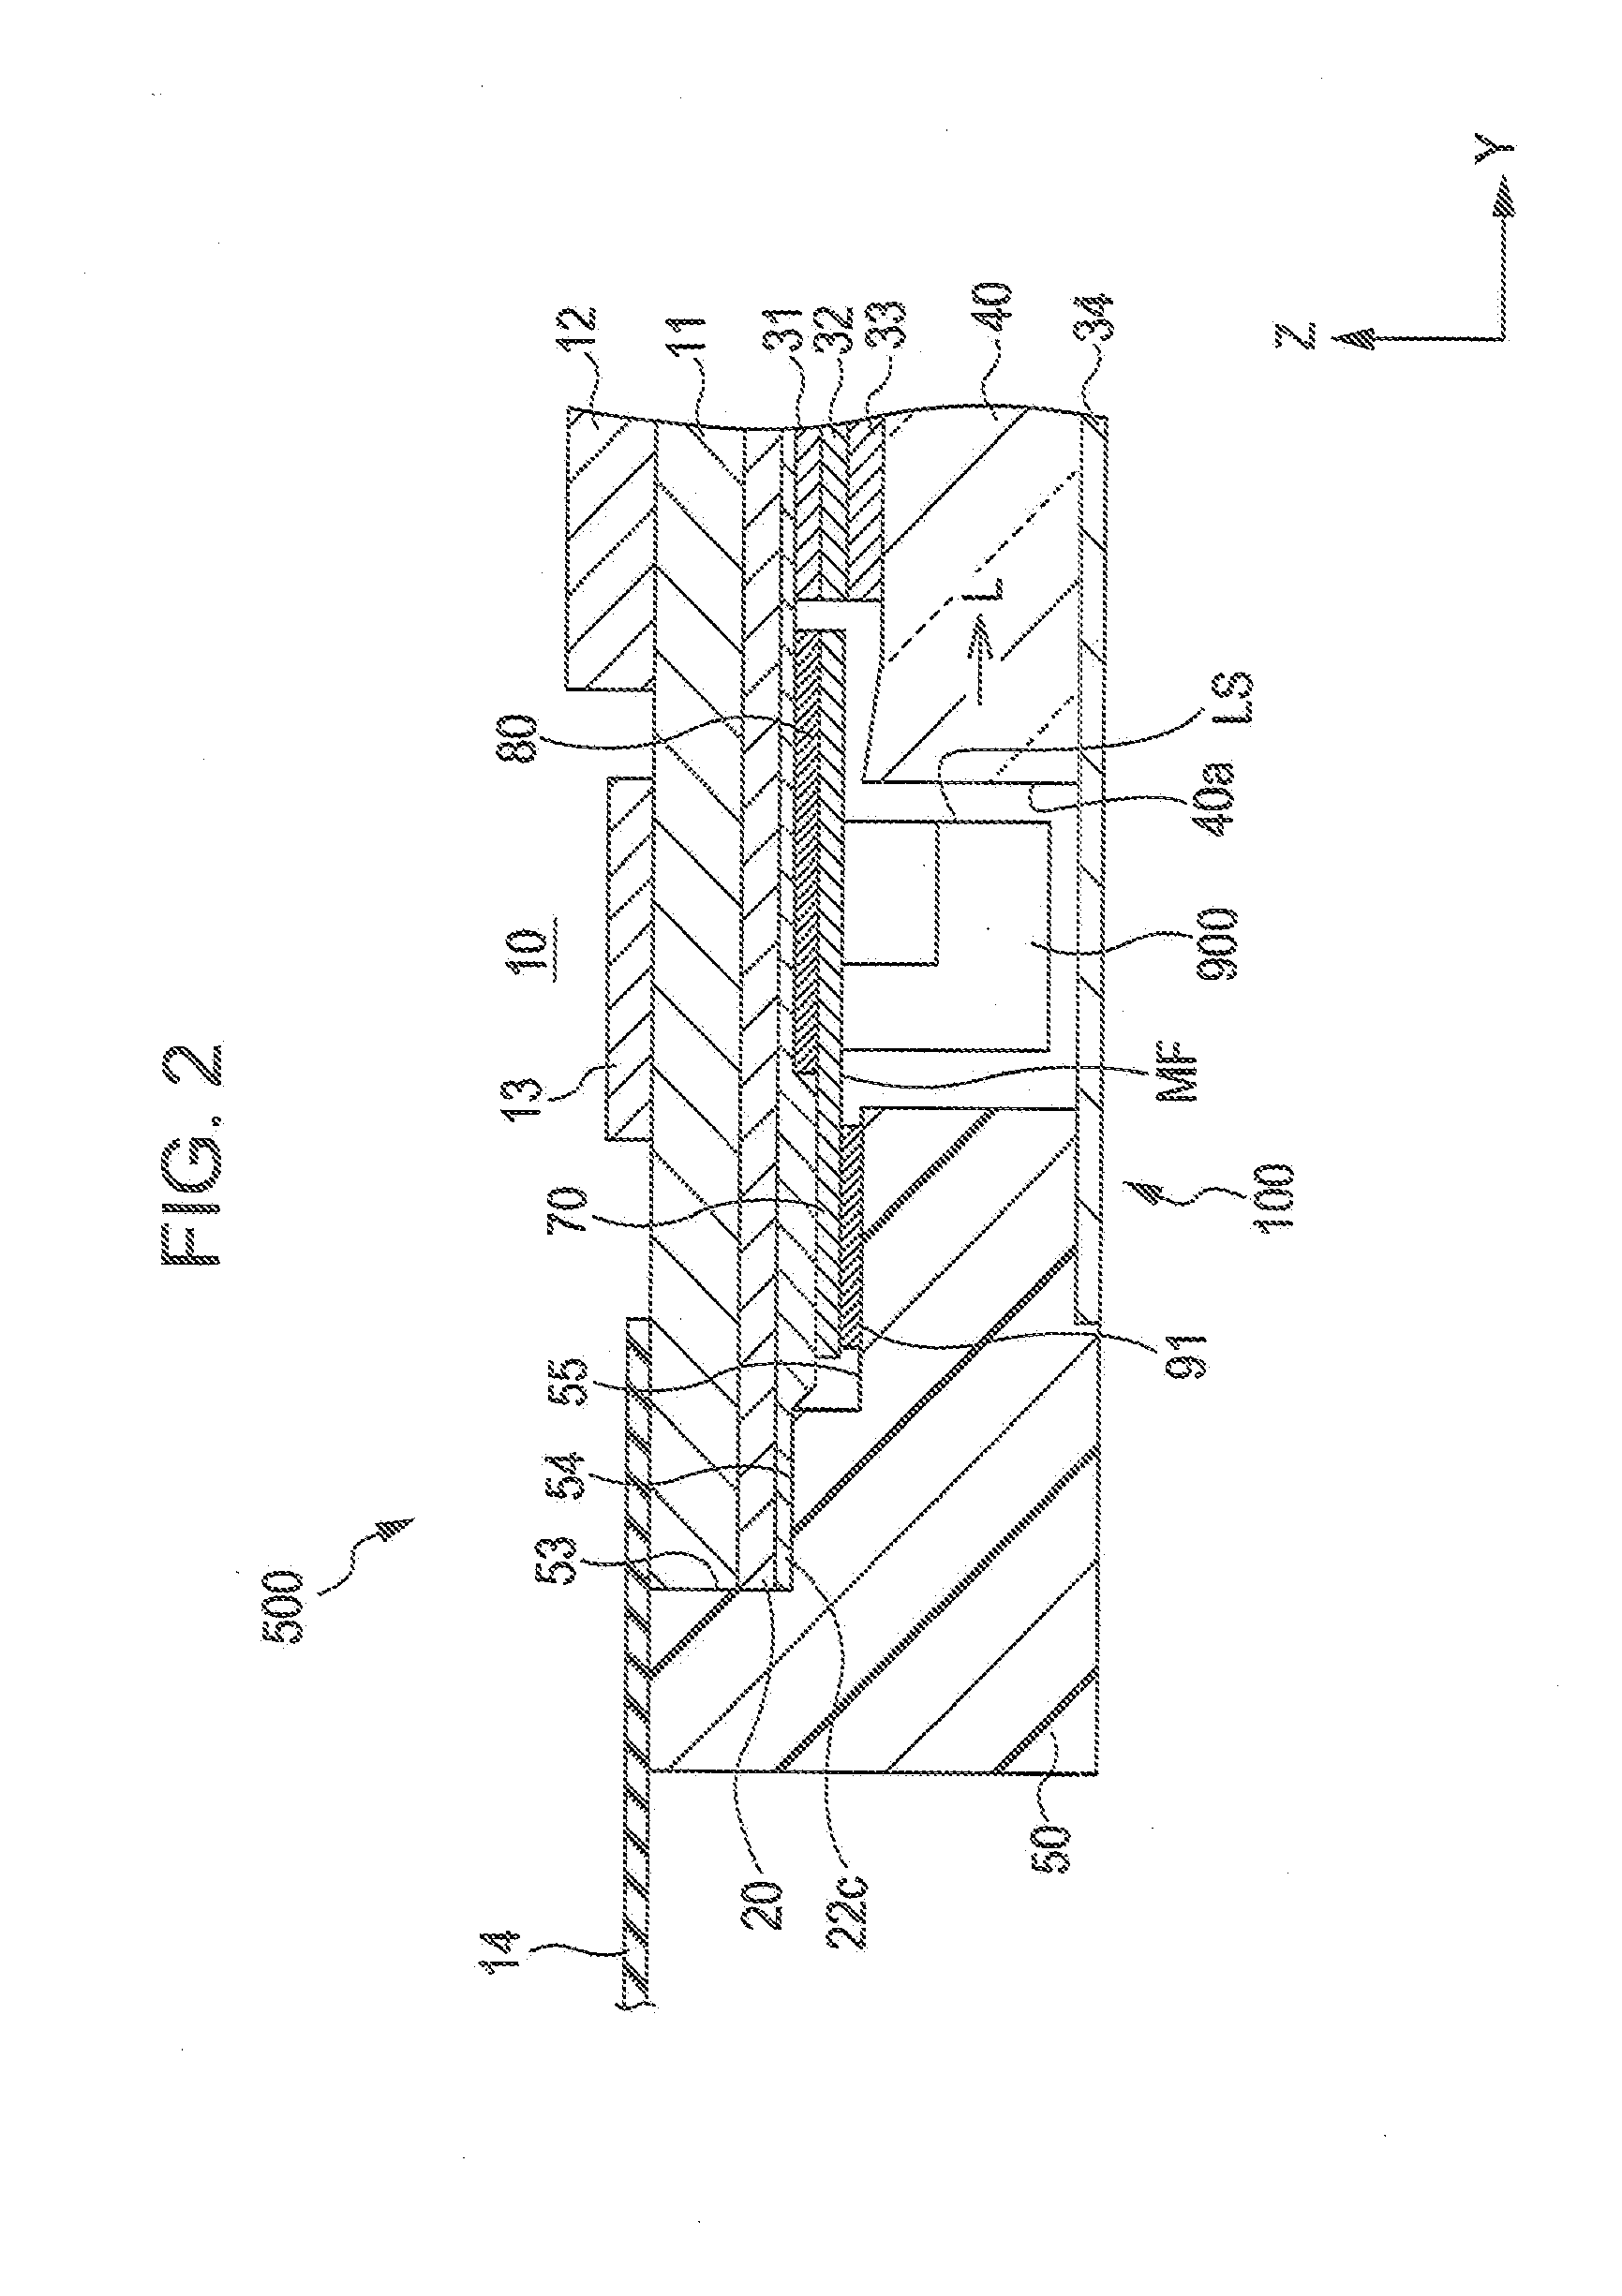 Illumination device and liquid crystal display apparatus